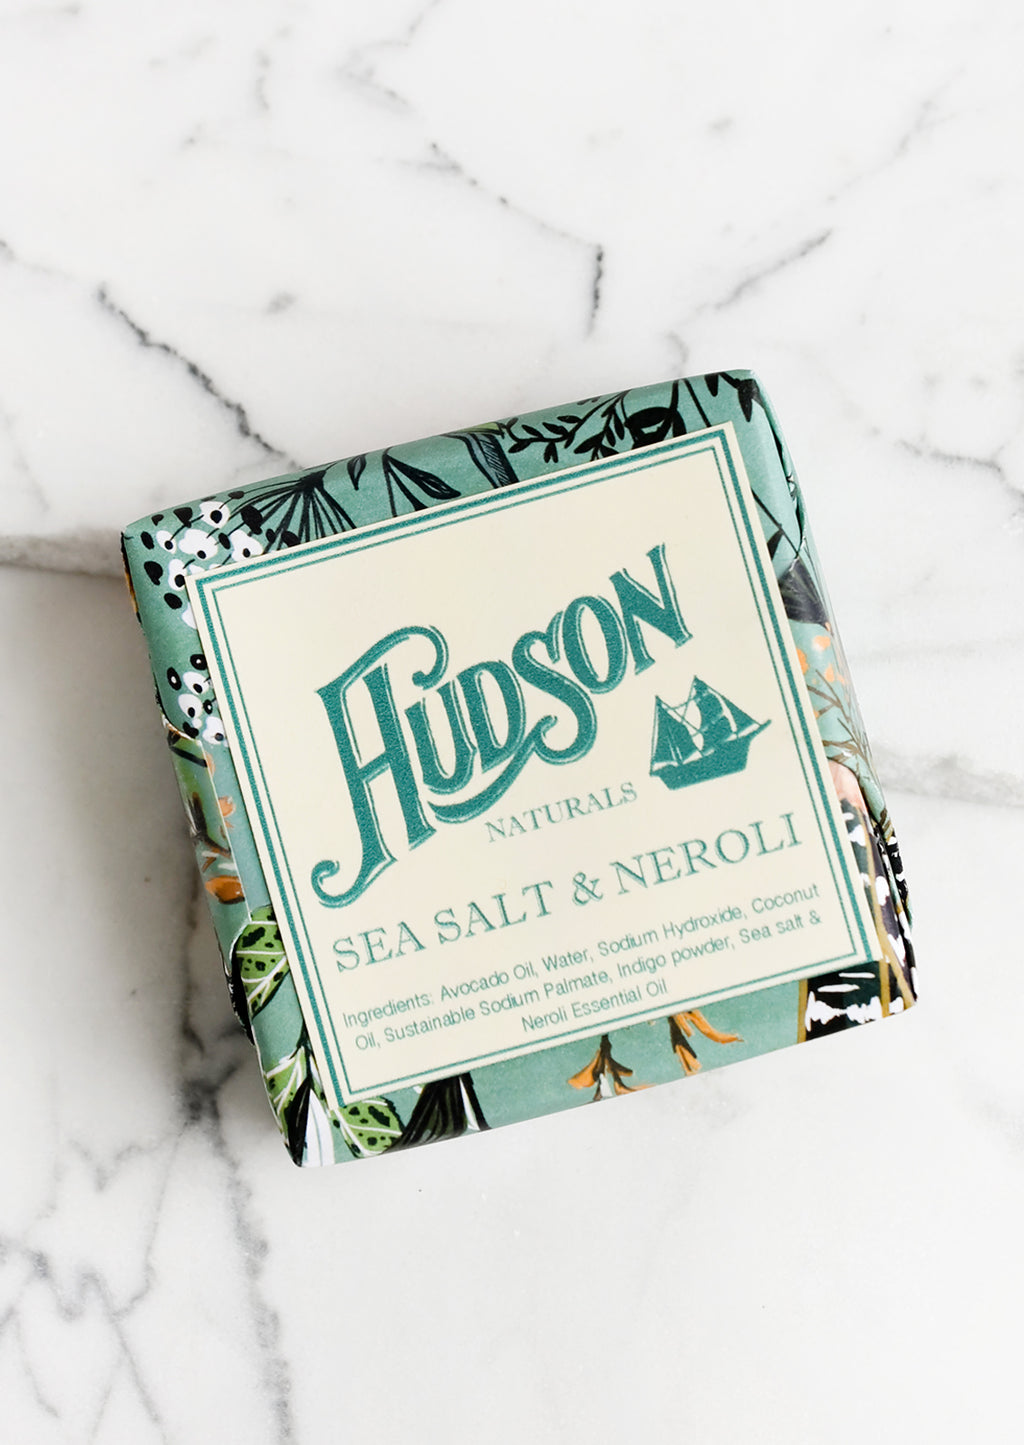 Sea Salt & Neroli: A square bar of soap in botanical printed packaging in Sea Salt & Neroli scent.